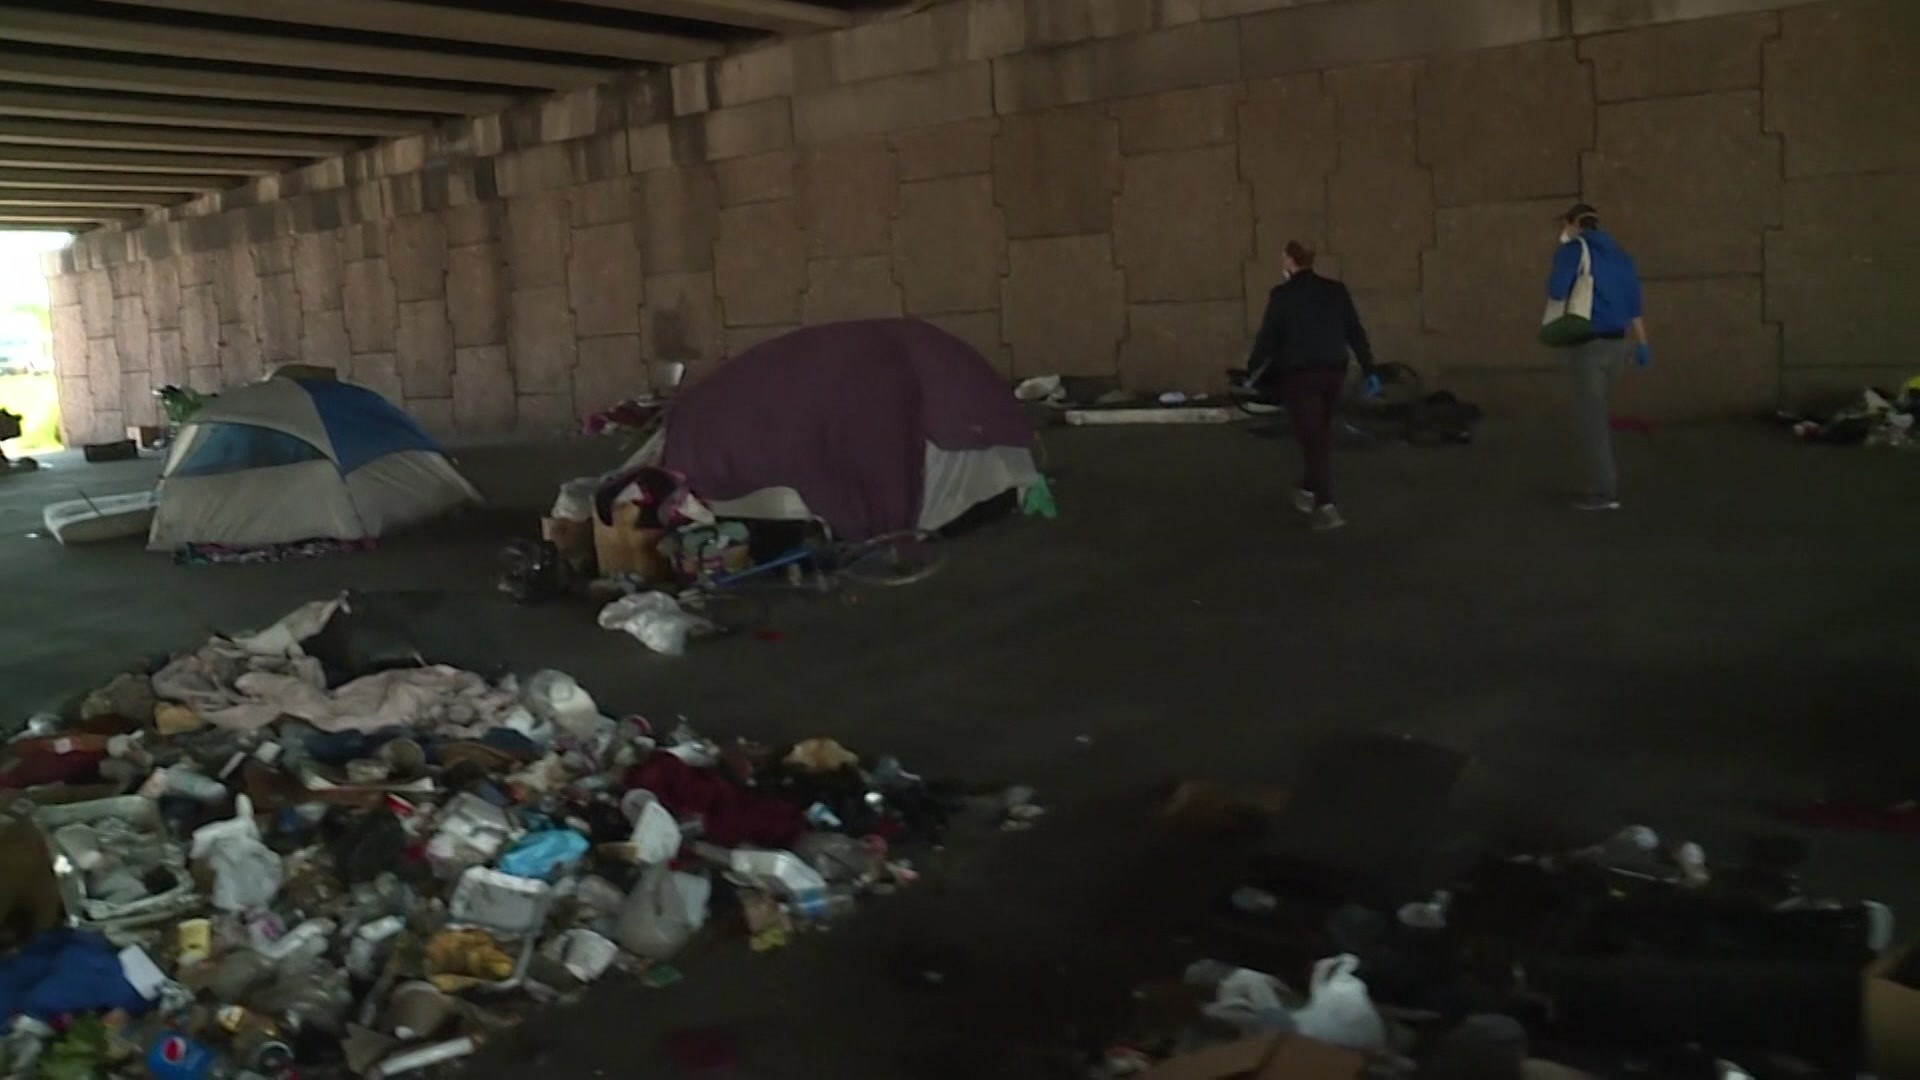 Houston Harris County Open New Homeless Shelter In Efforts To Mitigate Spread Of Coronavirus